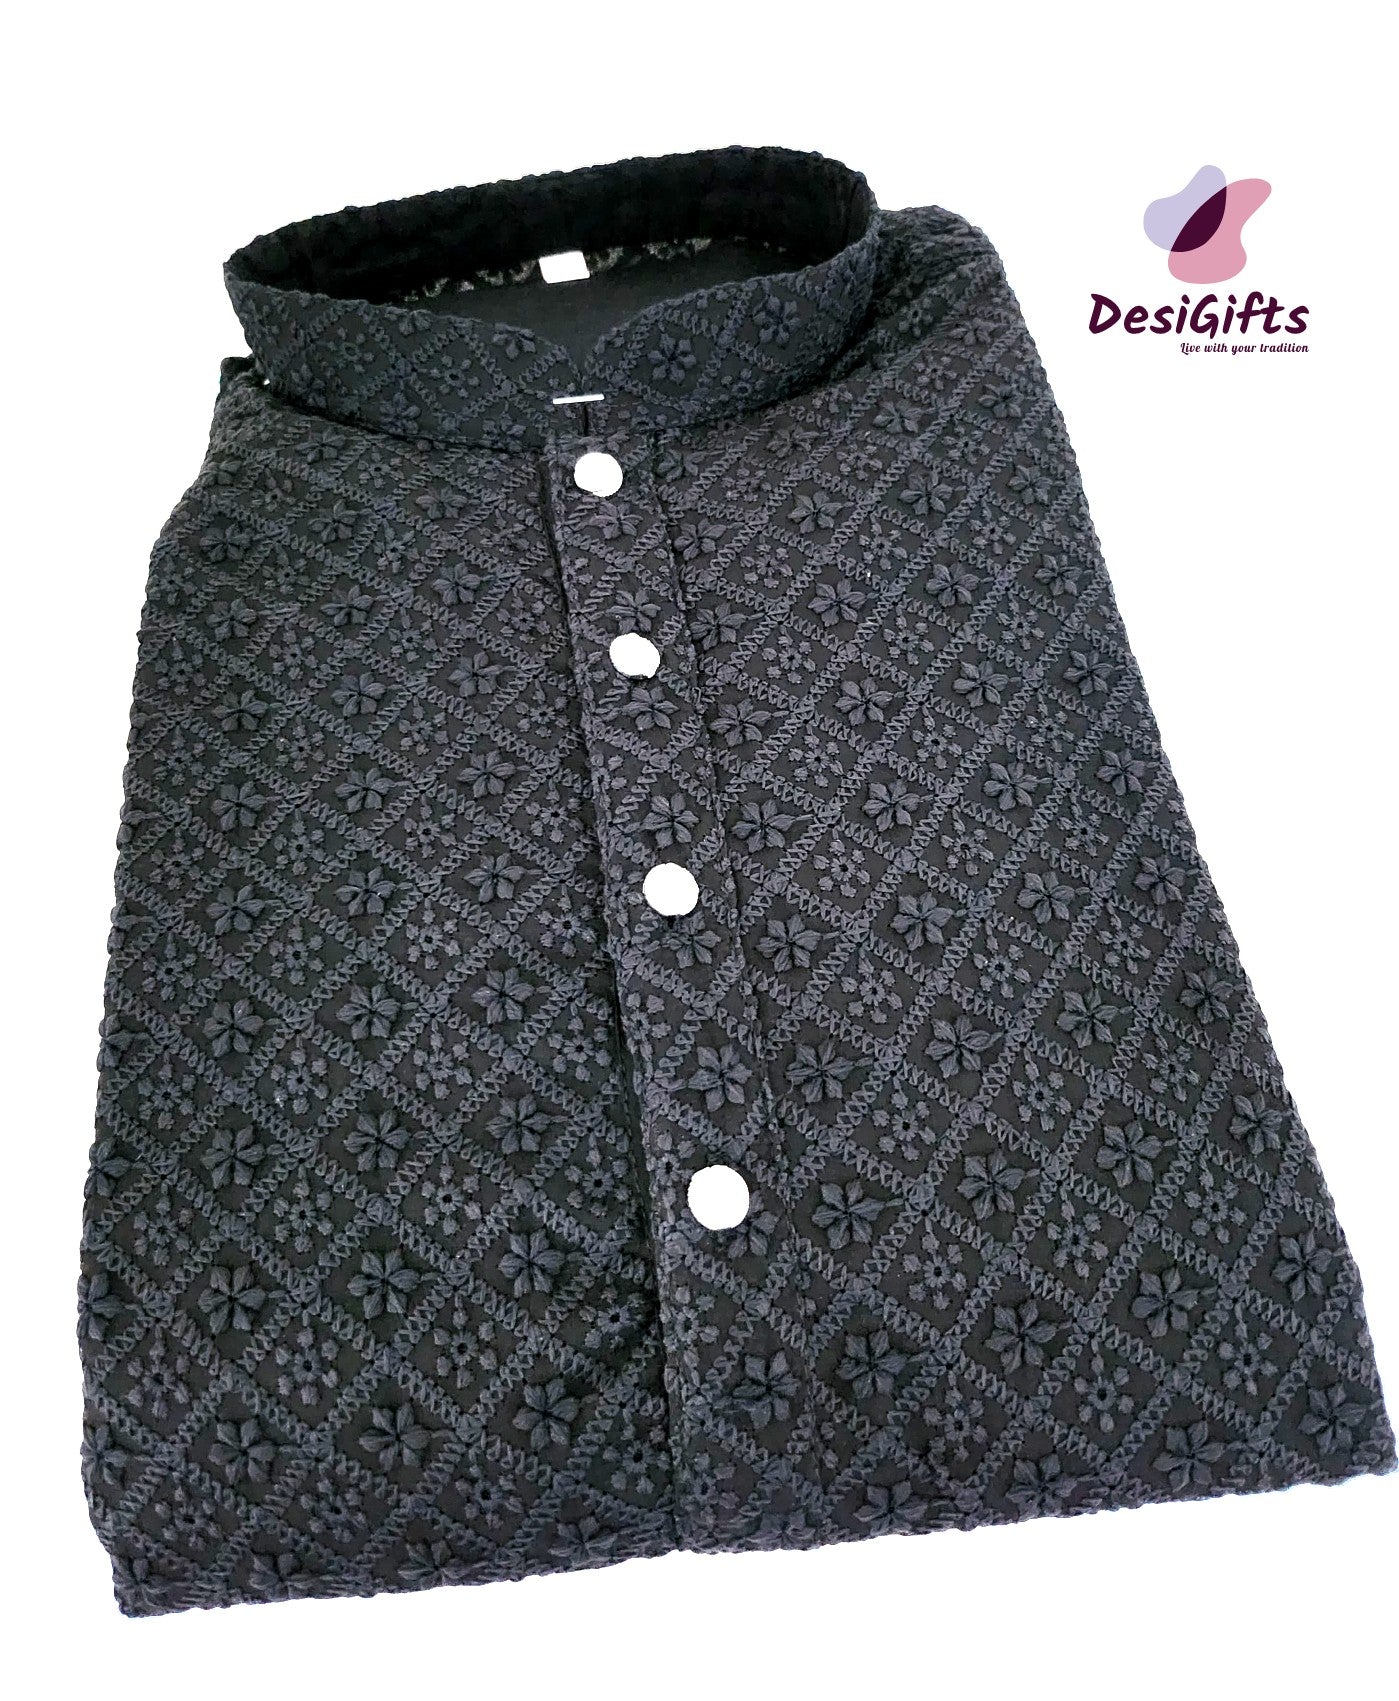 Size 38 Black Cotton Chickenkari Kurta Pajama Set, Design KPS# 654